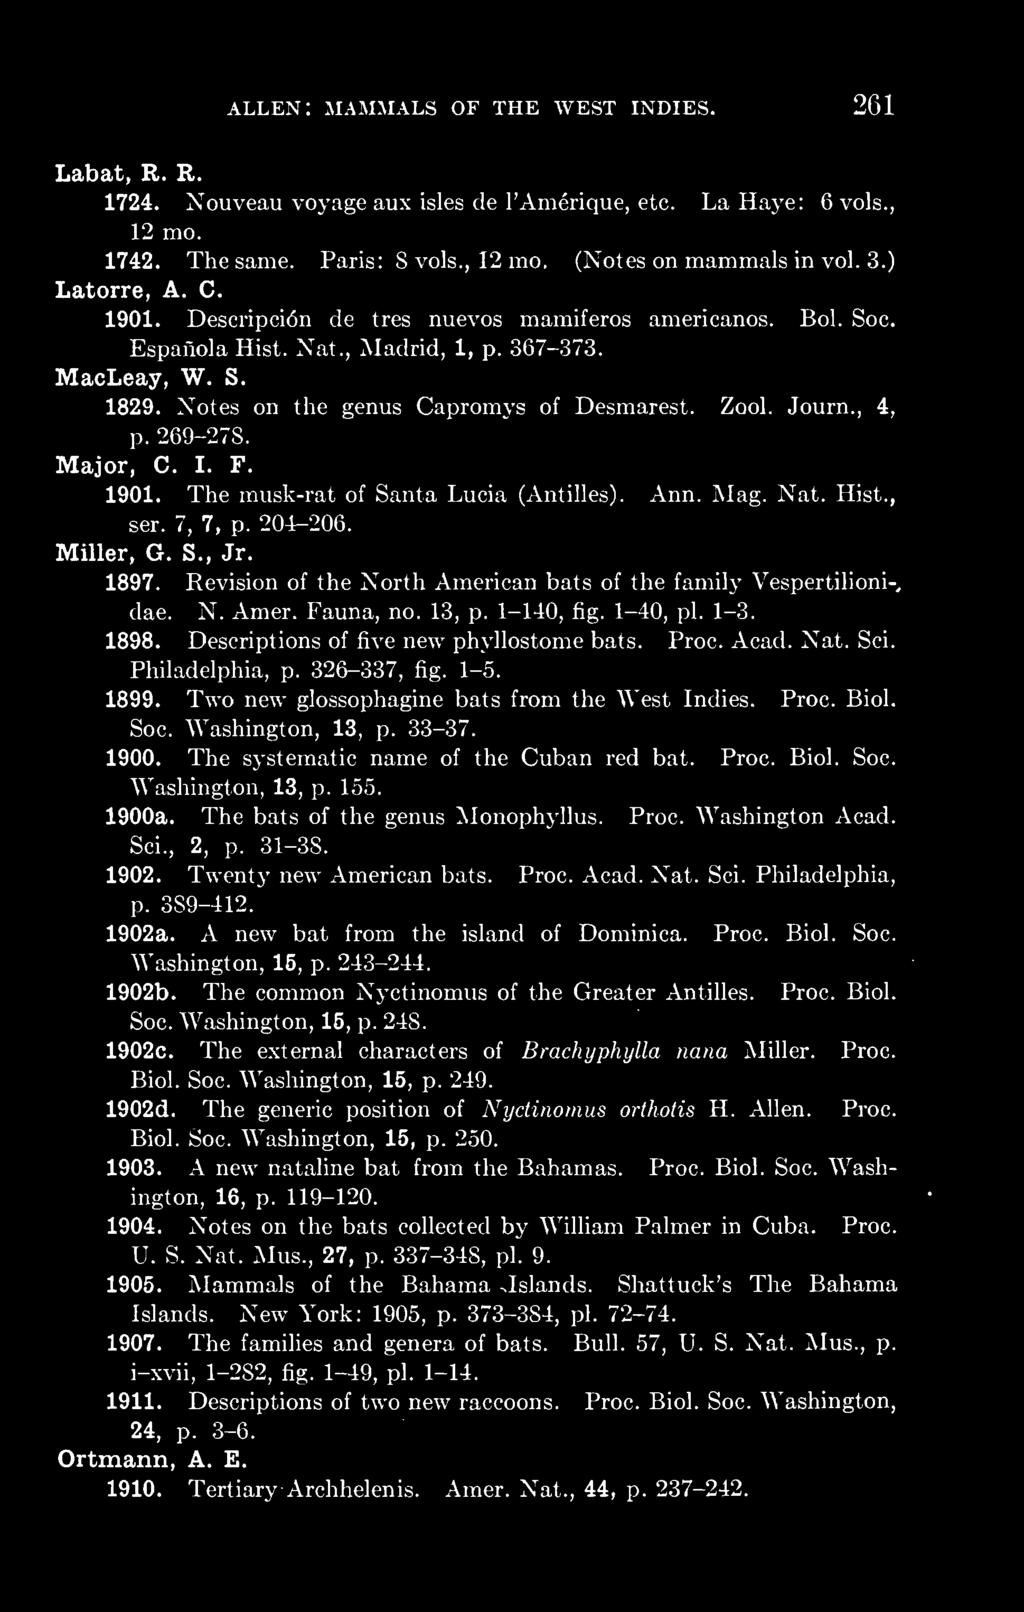 Journ., 4, p. 269-278. Major, C. I. F. 1901. The musk-rat of Santa Lucia (Antilles). Ann. Mag. Nat. Hist., ser. 7, 7, p. 204-206. Miller, G. S., Jr. 1897.